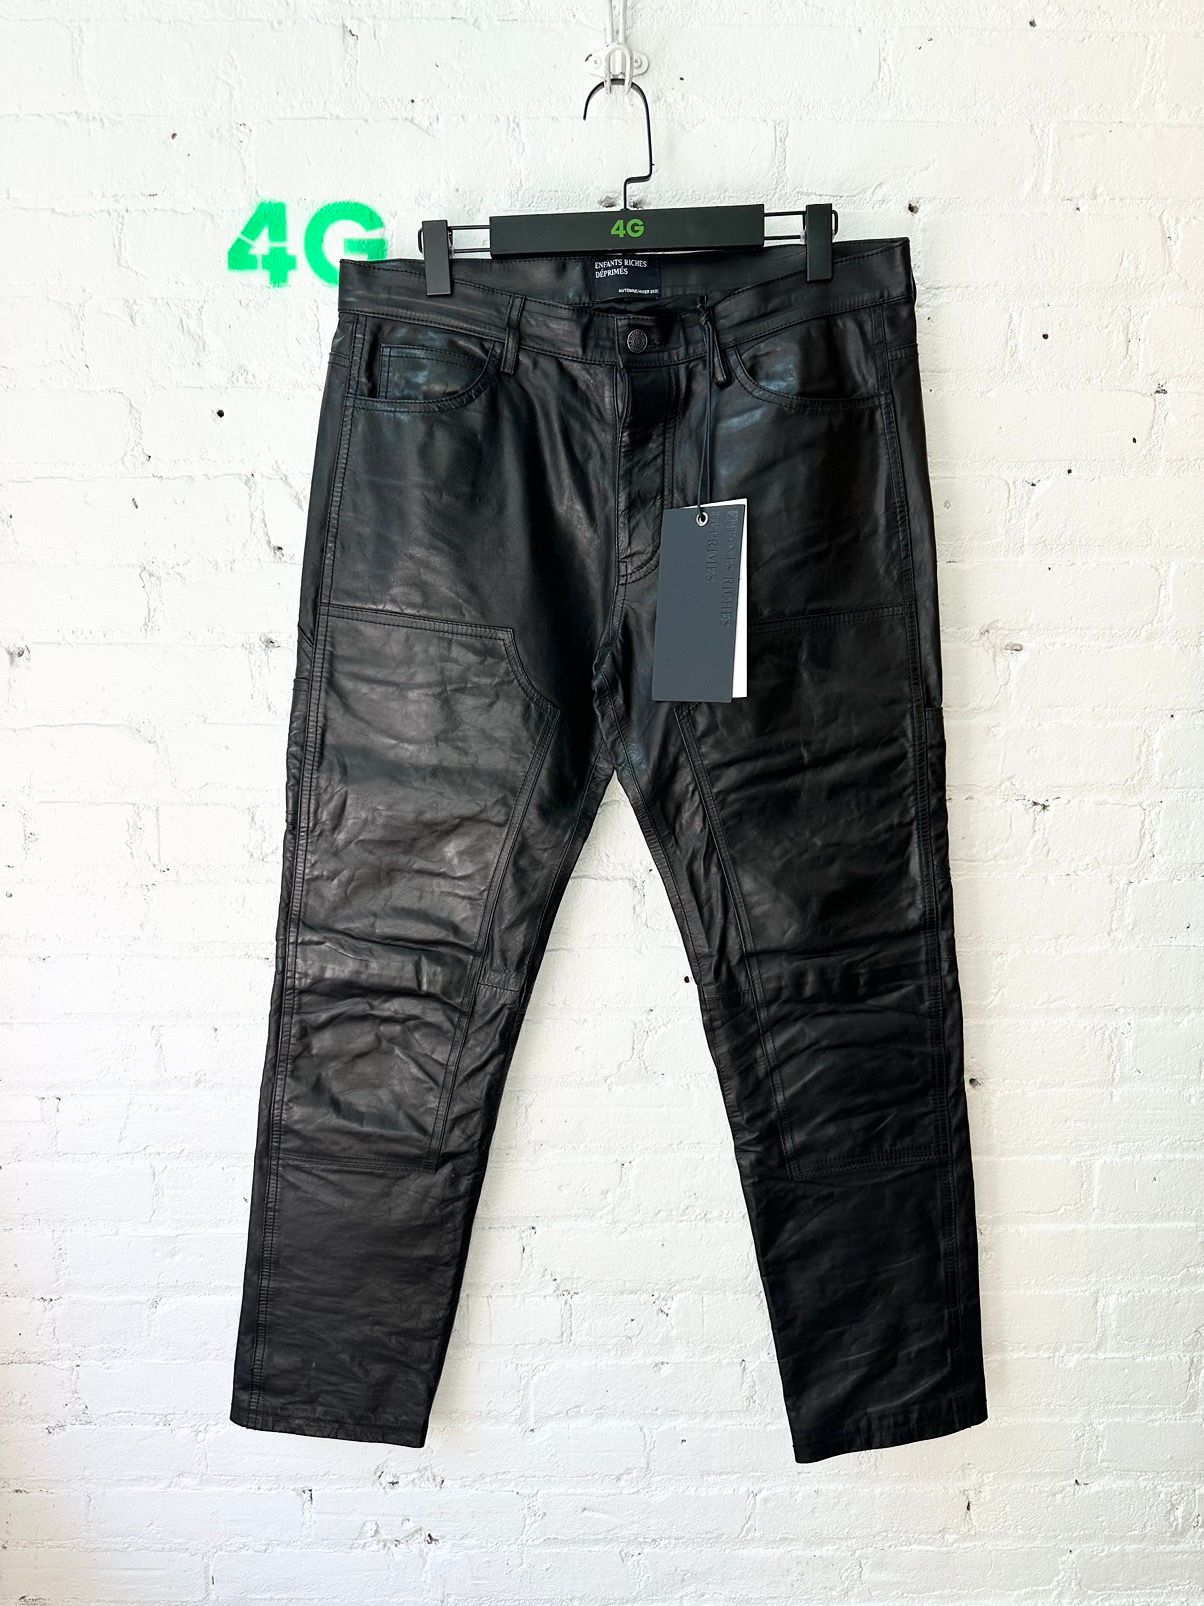 Pre-owned Enfants Riches Deprimes Erd Leather Double Knee Carpenter Pants 4gseller In Black